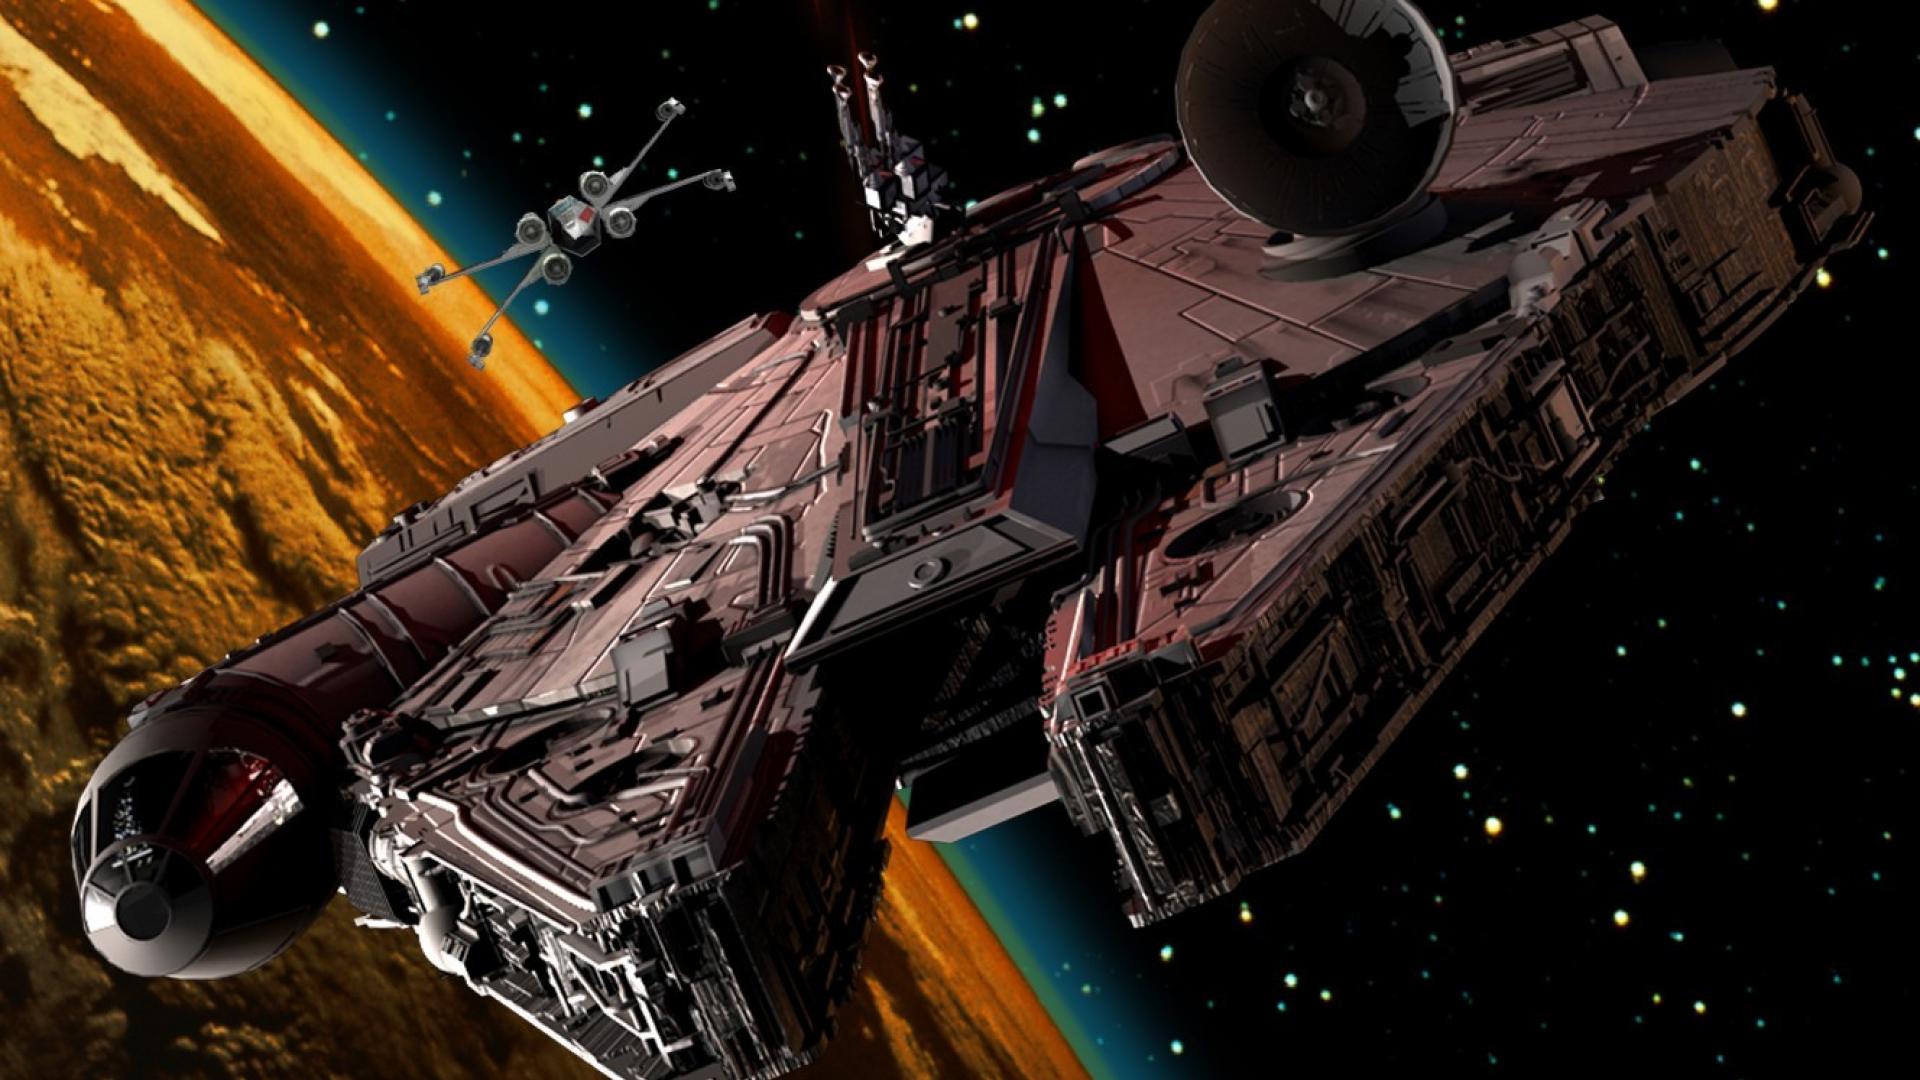 Spaceships millennium falcon x-wing science fiction artwork ...